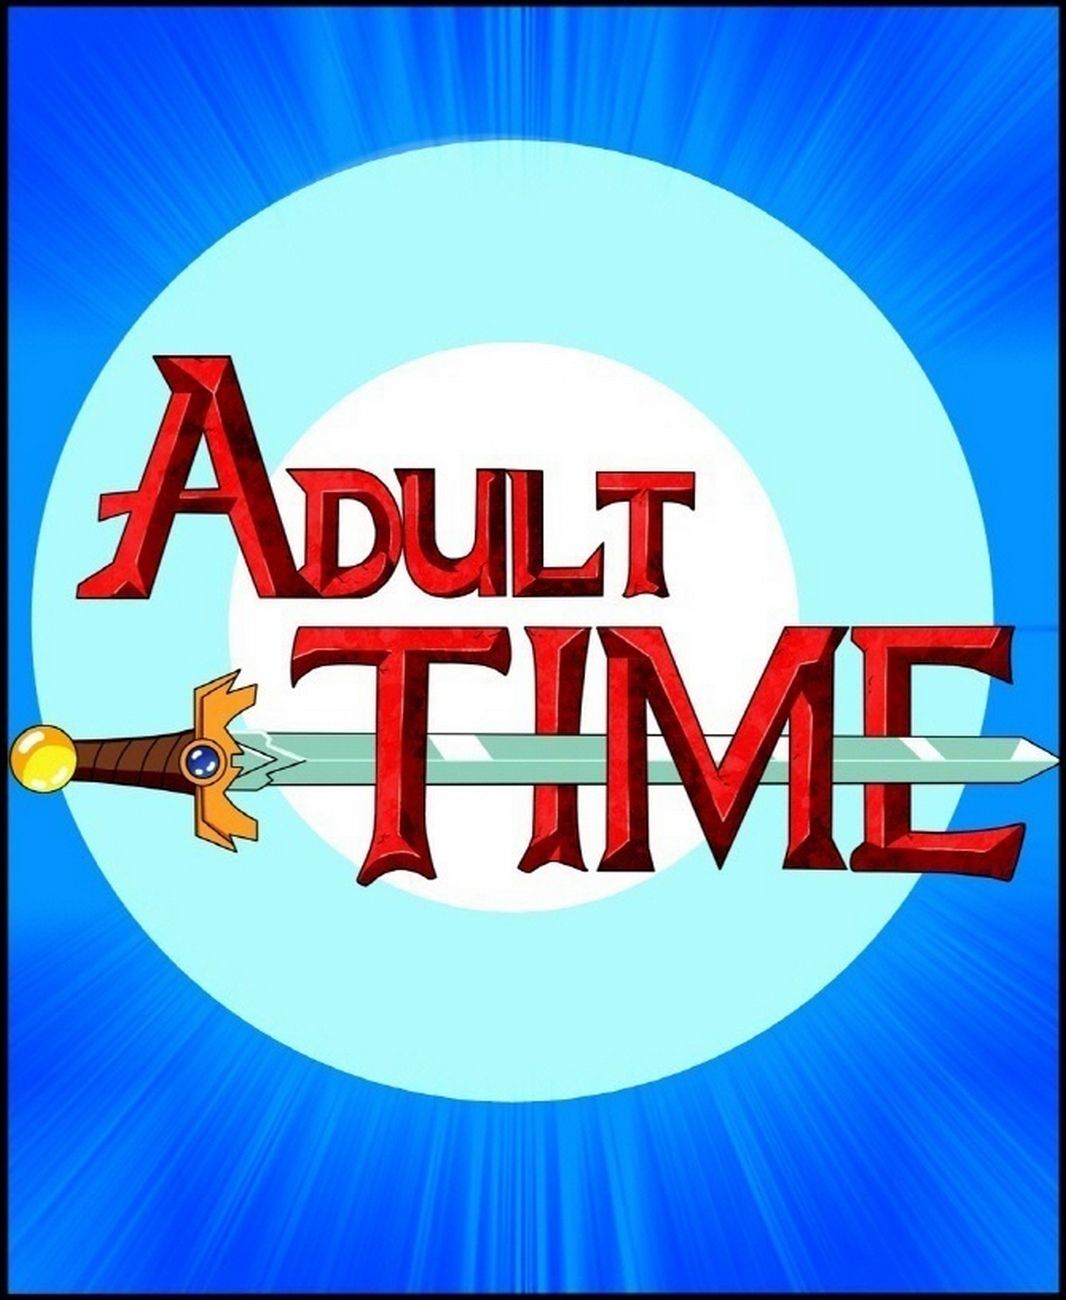 Adult_Time_1 comix.jpg